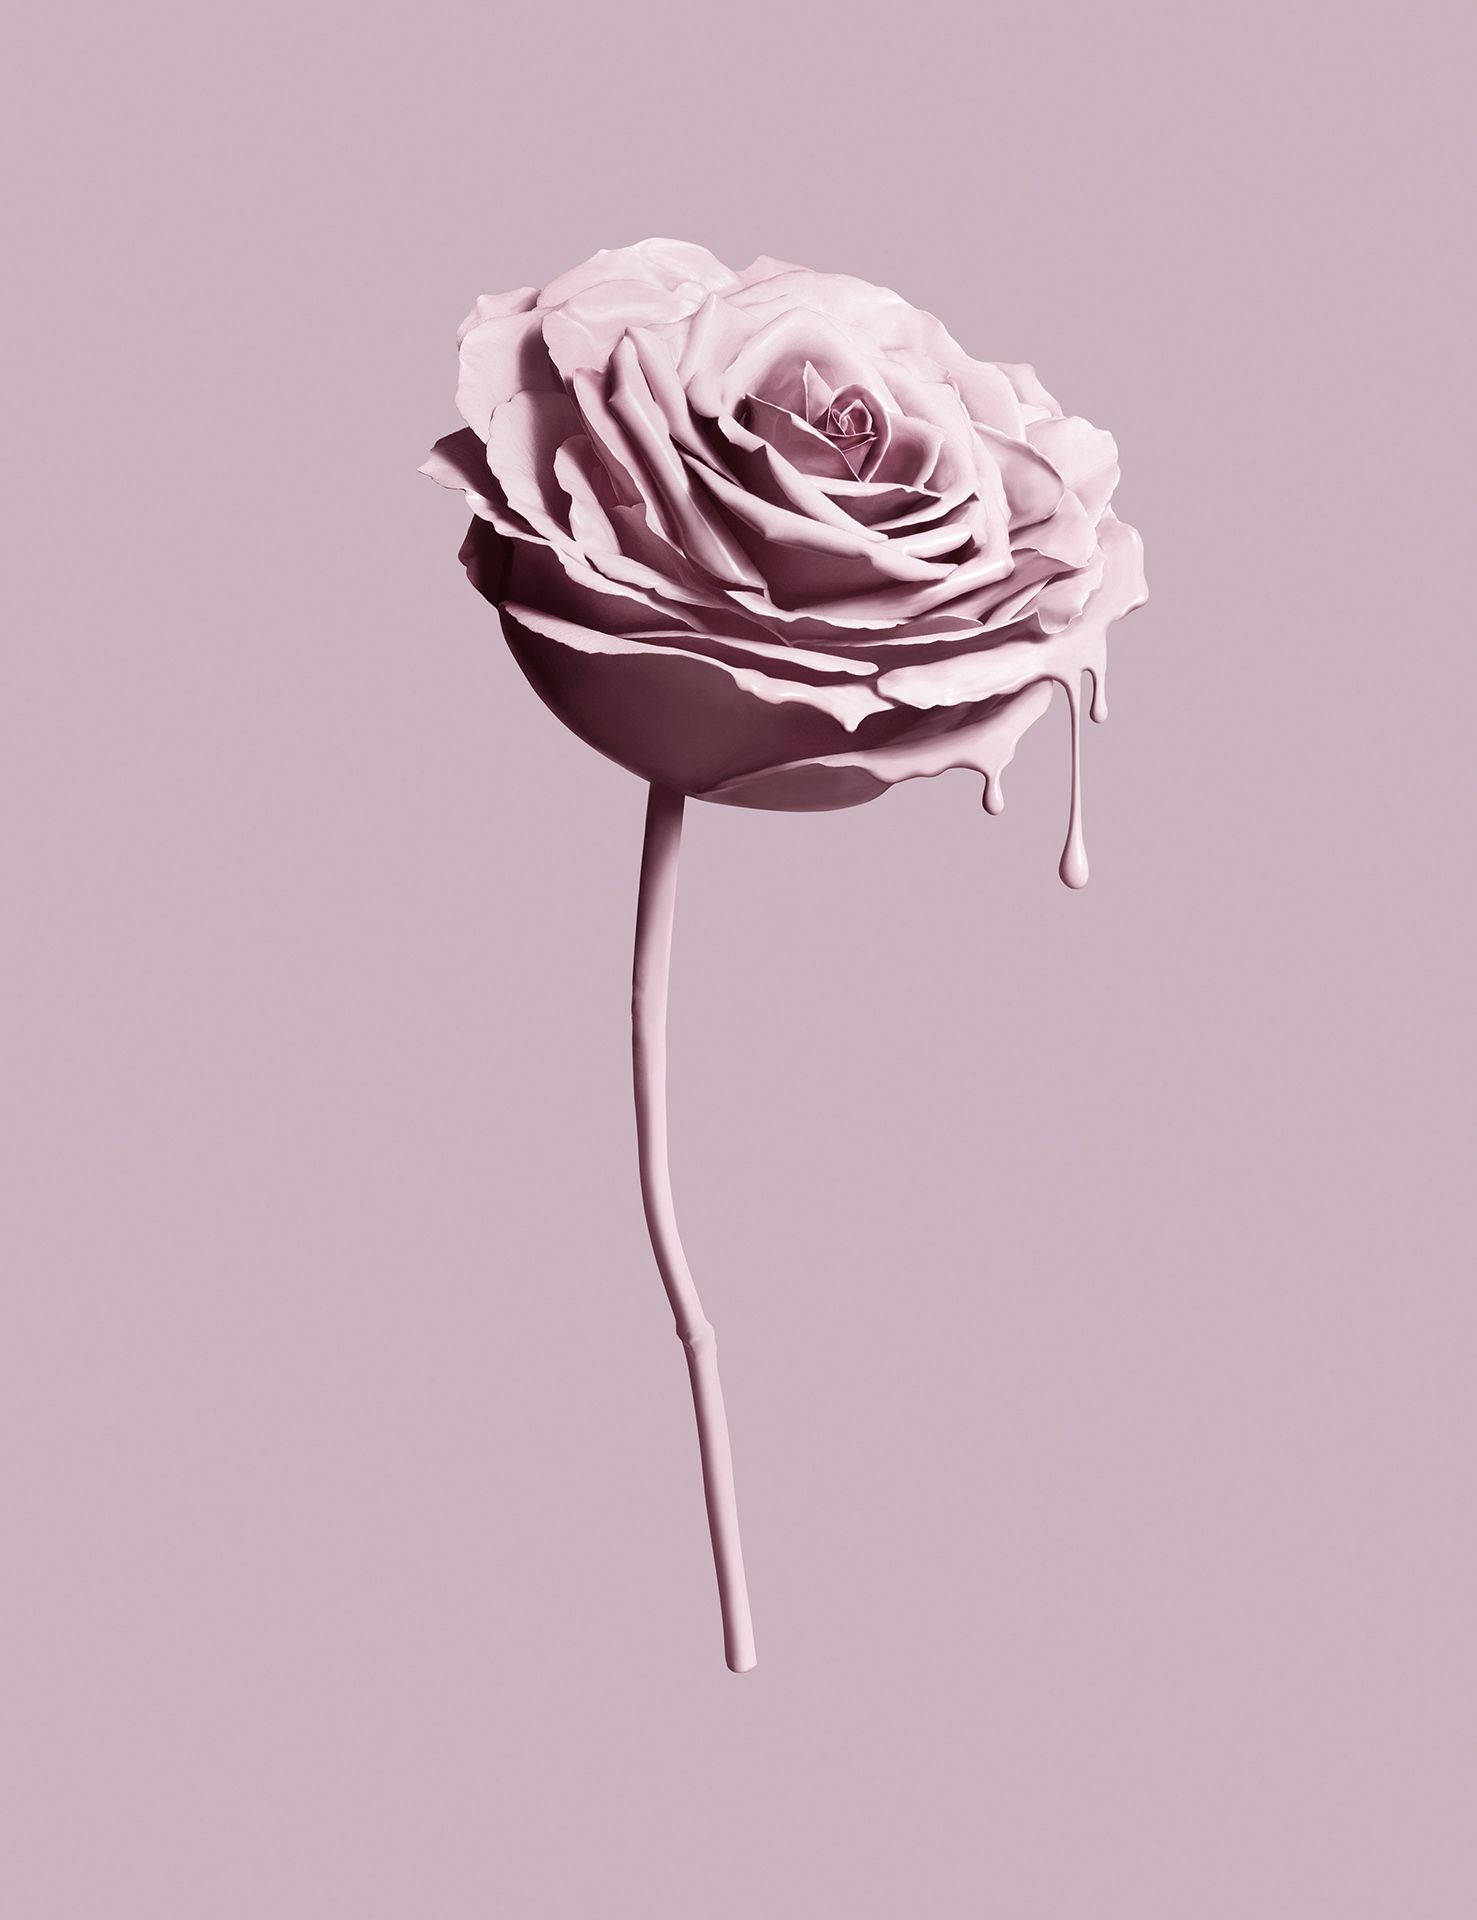 Pink Rose Tumblr Aesthetic